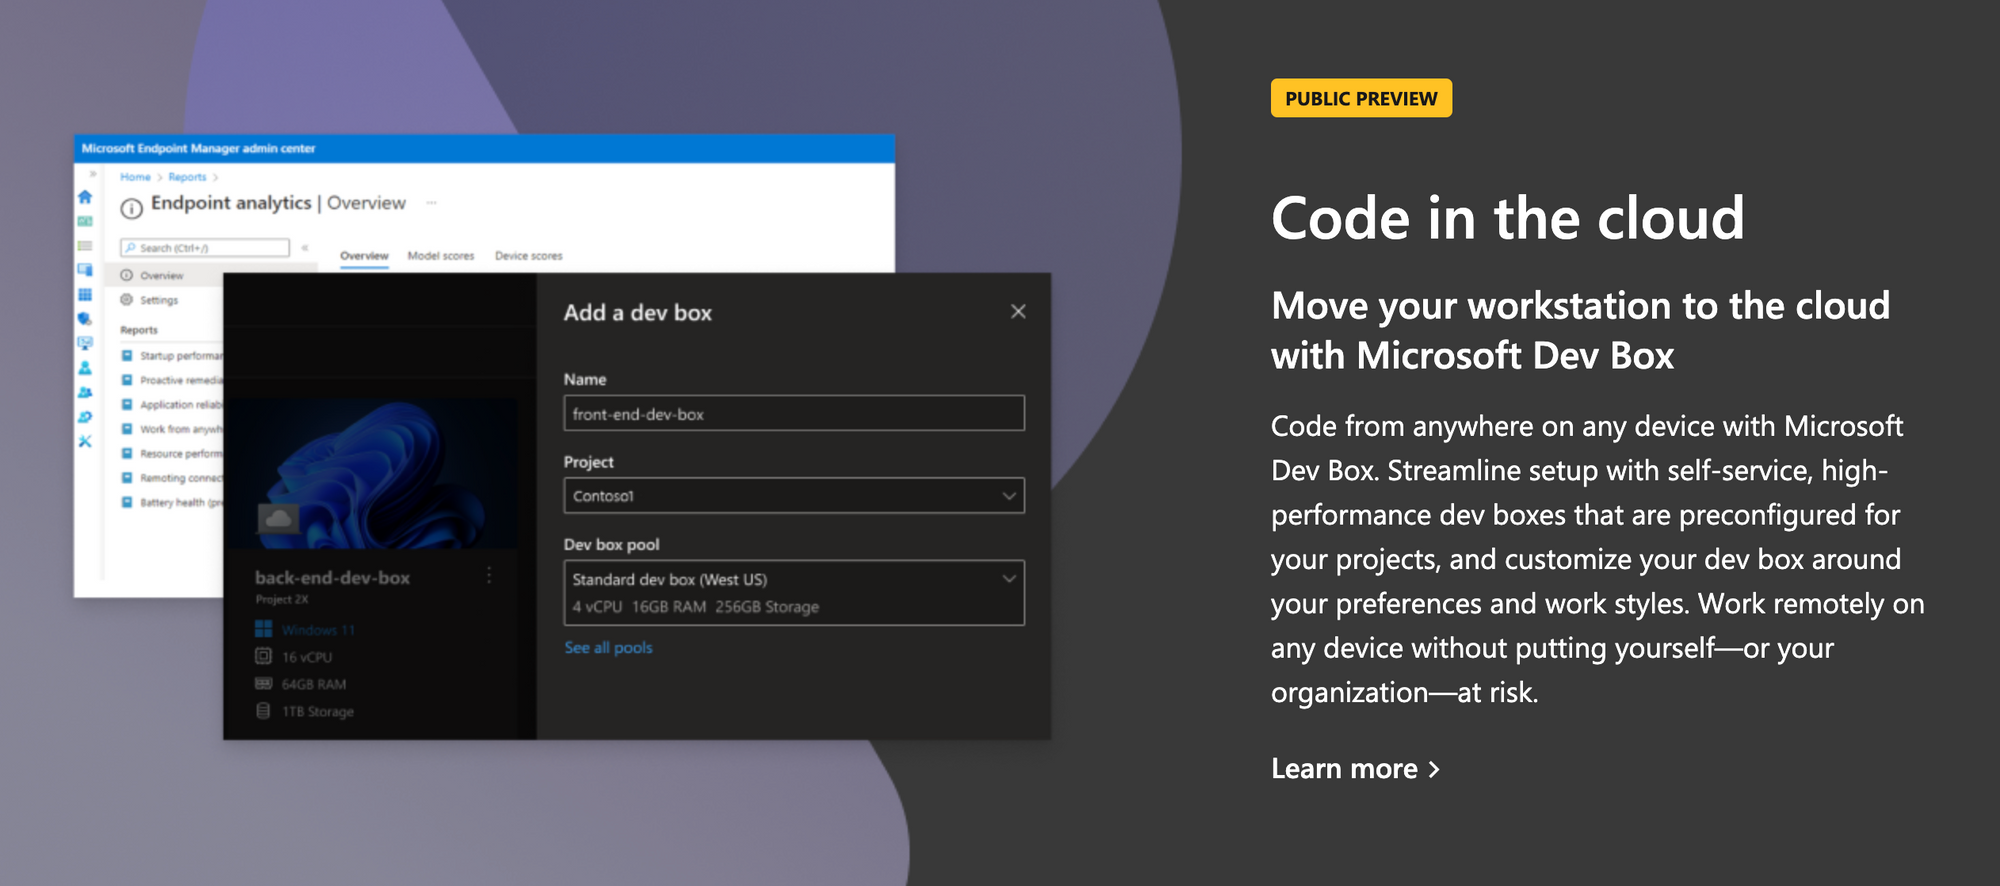 Visual Studio Code is designed to fracture